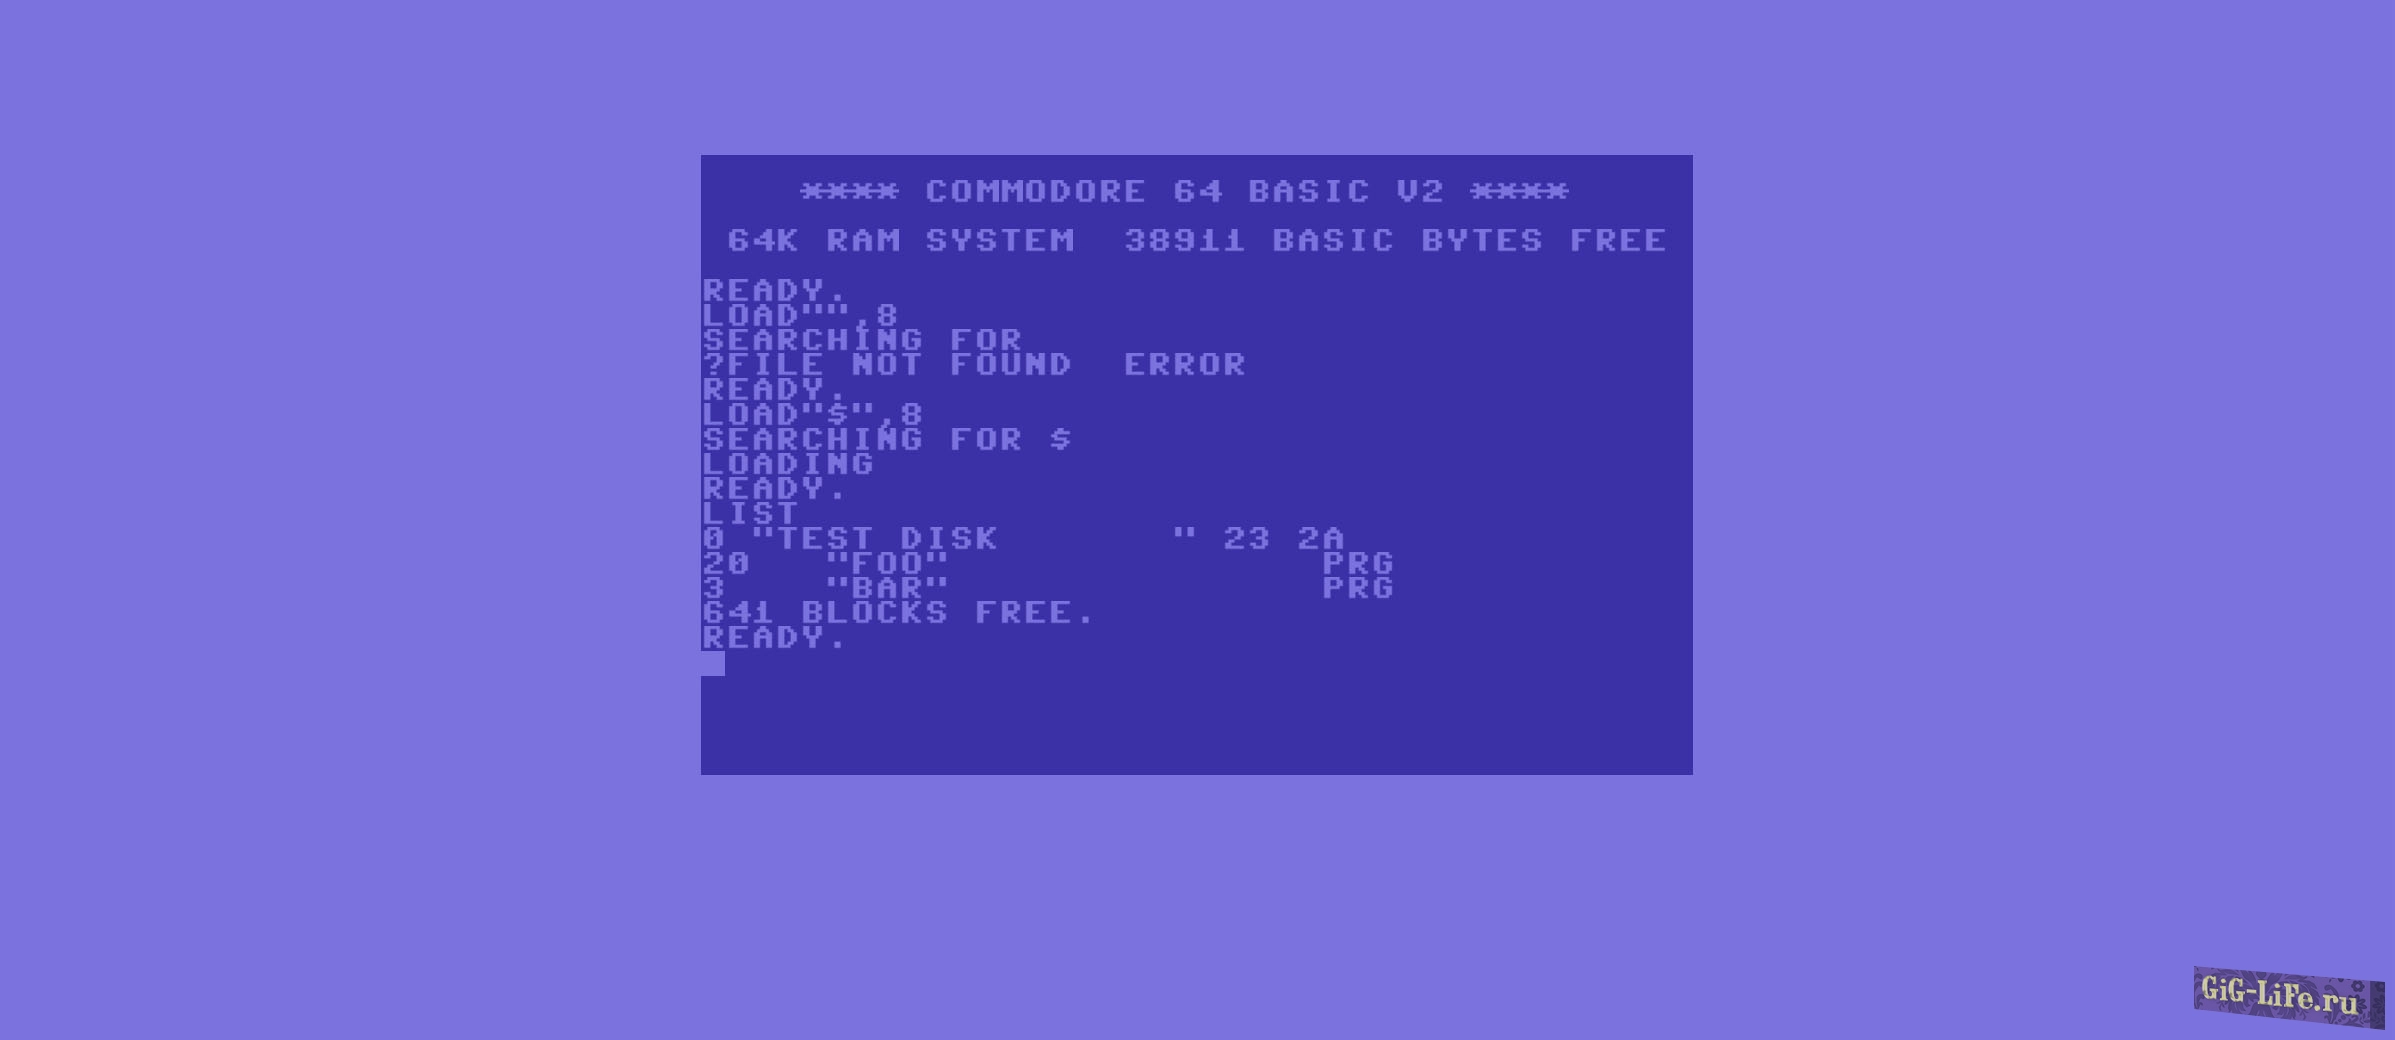 Страница 404 — Интерфейс Commodore 64 | Commodore 64 Interface